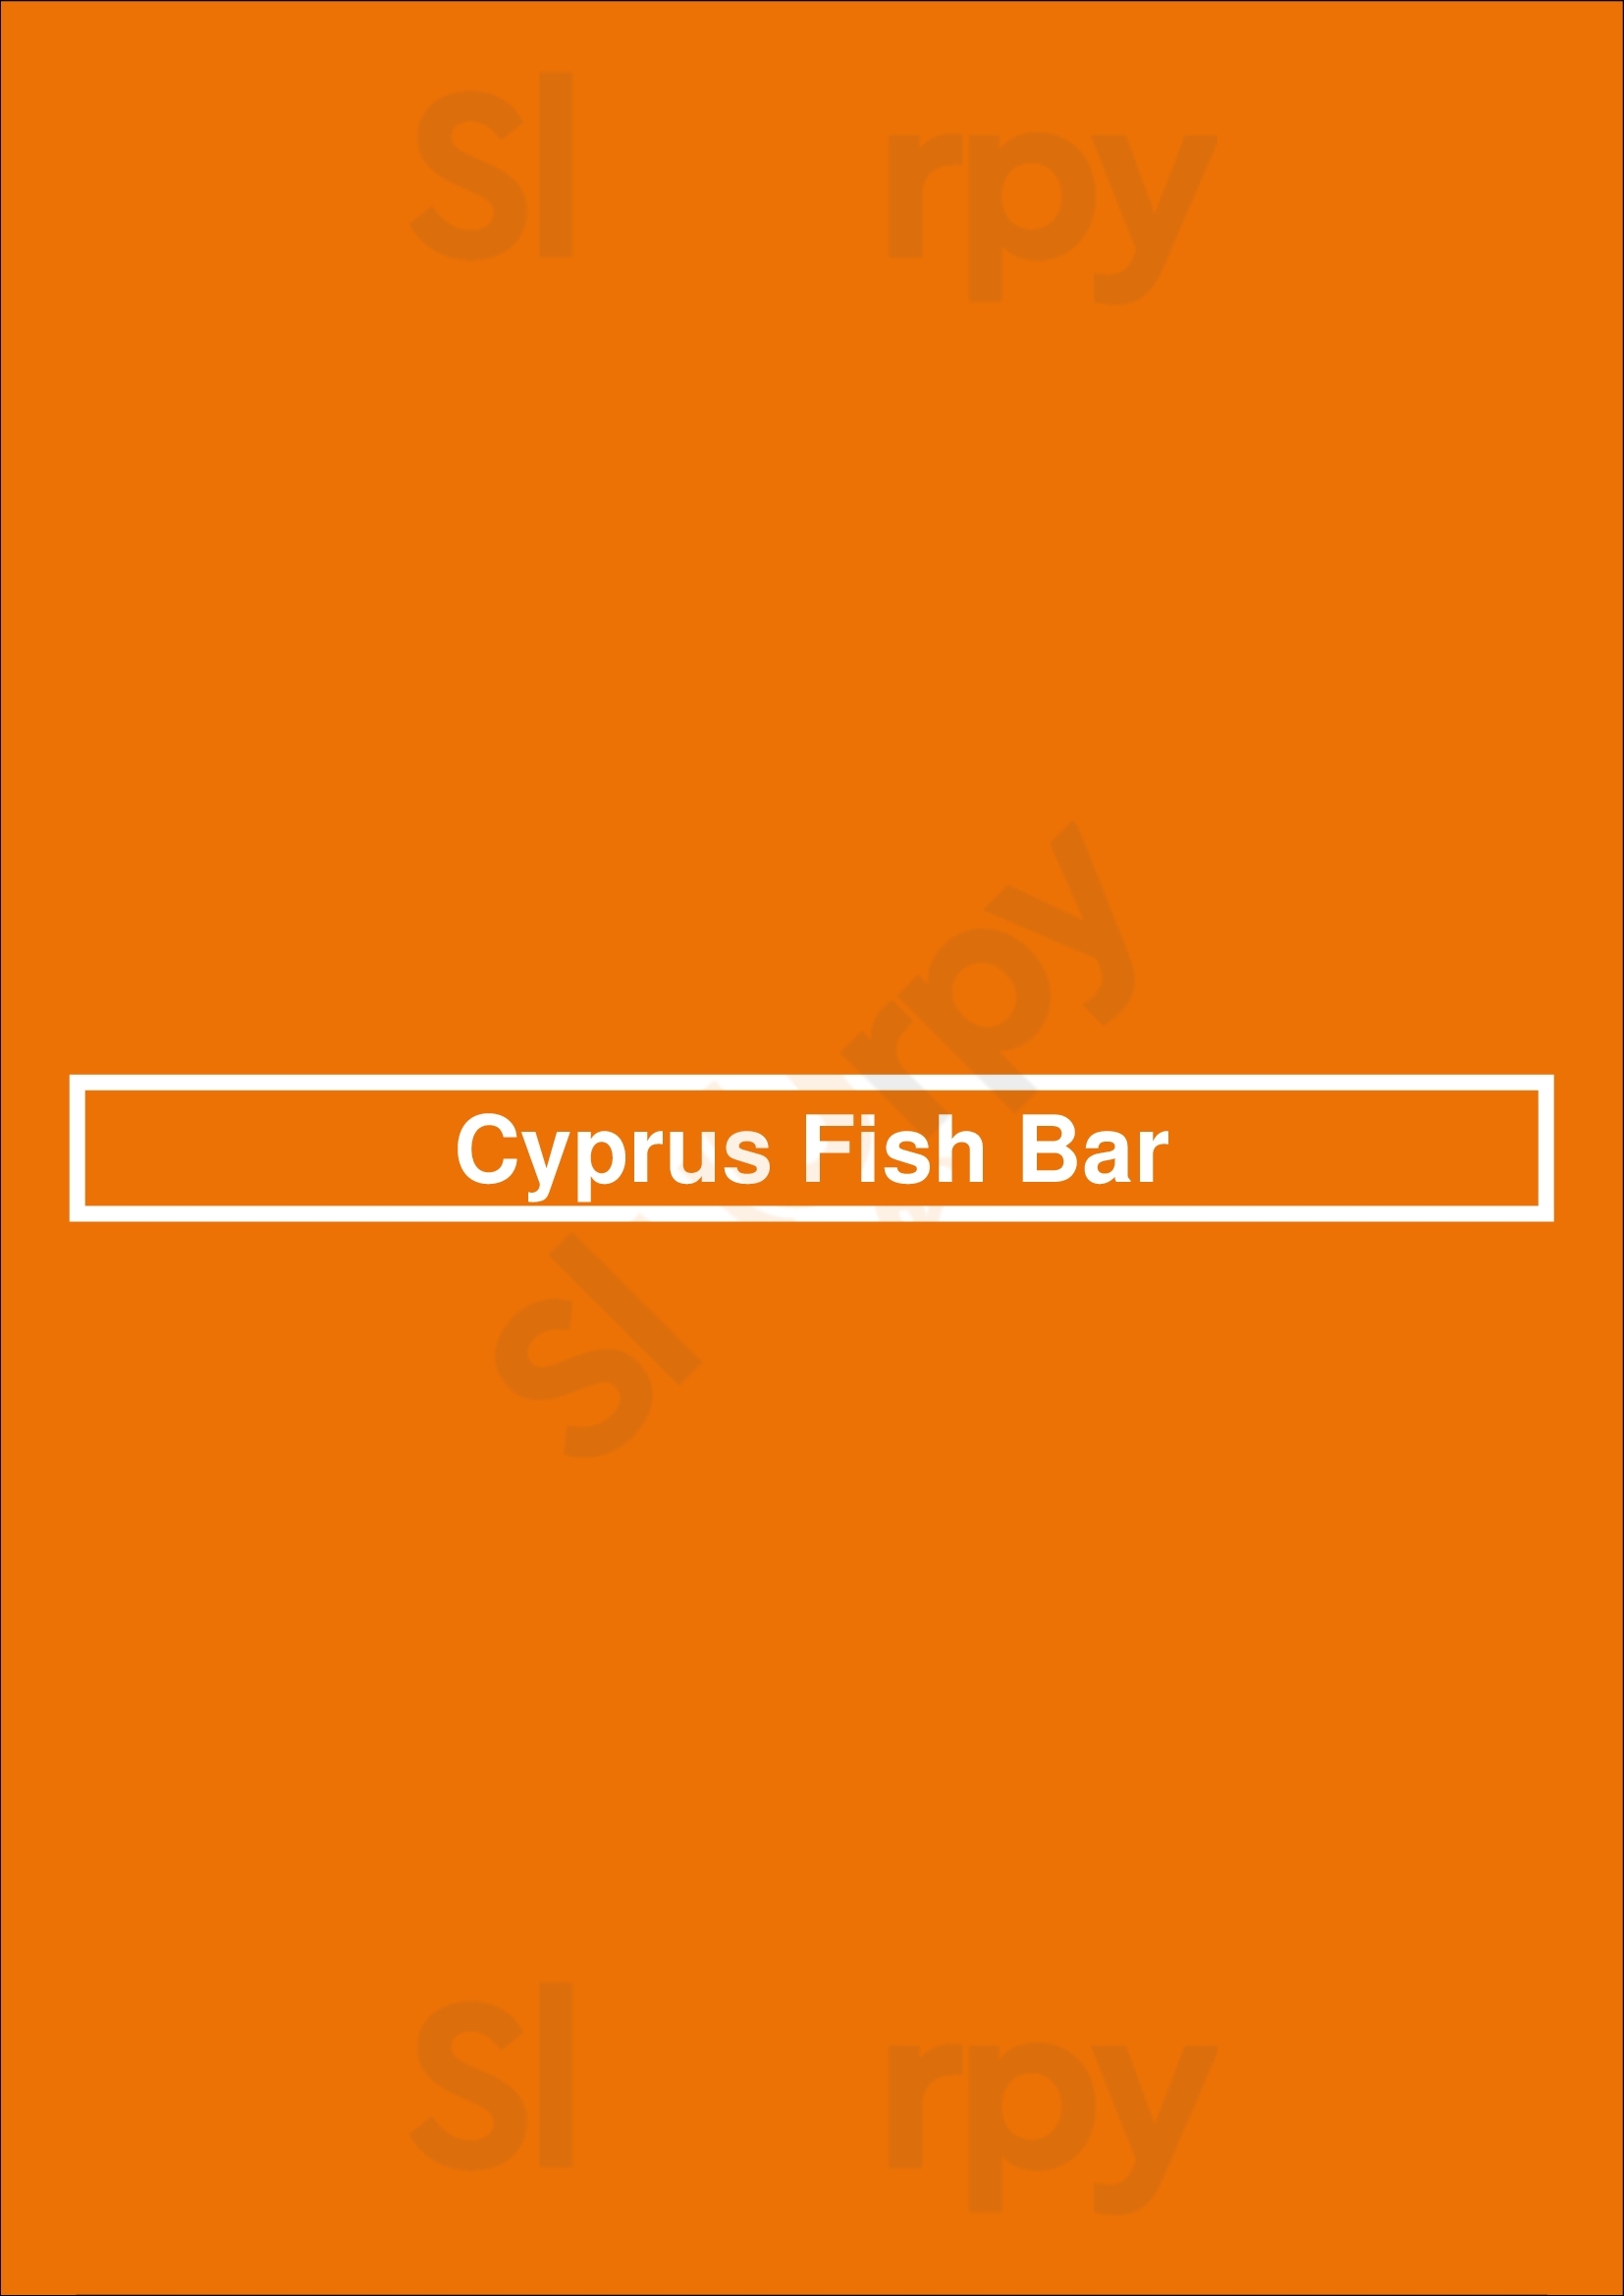 Cyprus Fish Bar Braintree Menu - 1